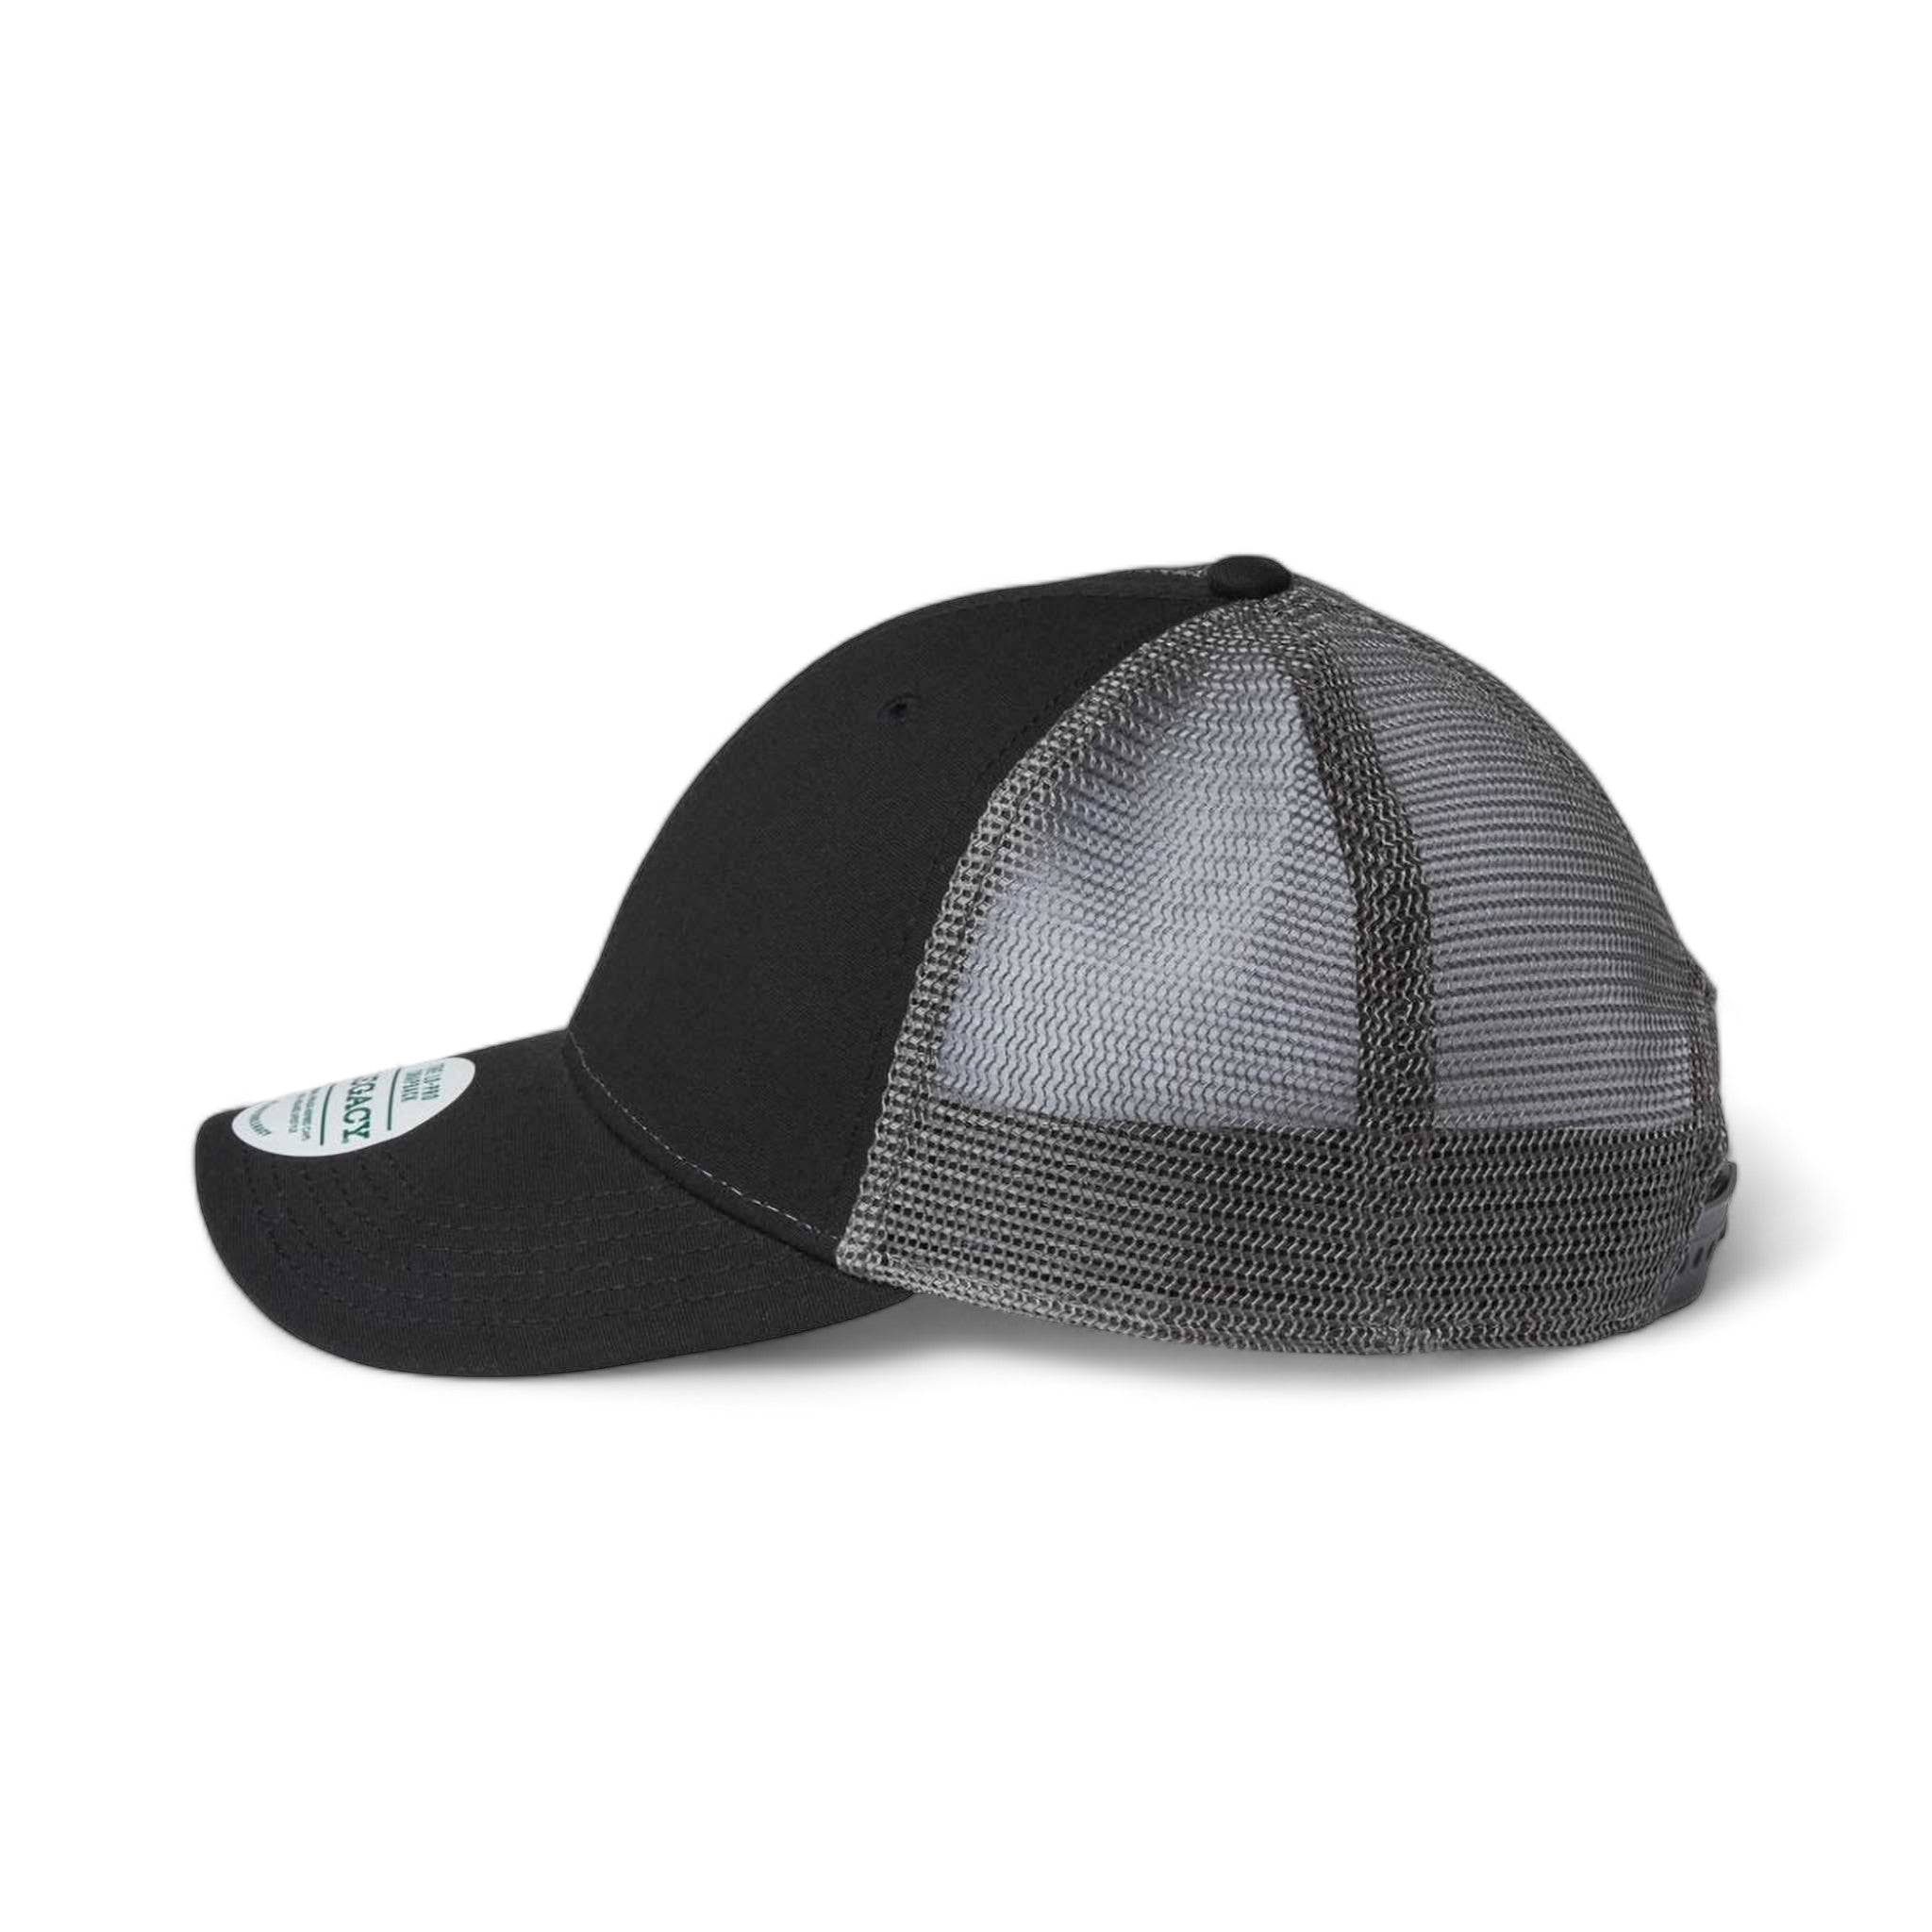 Side view of LEGACY LPS custom hat in black and dark grey